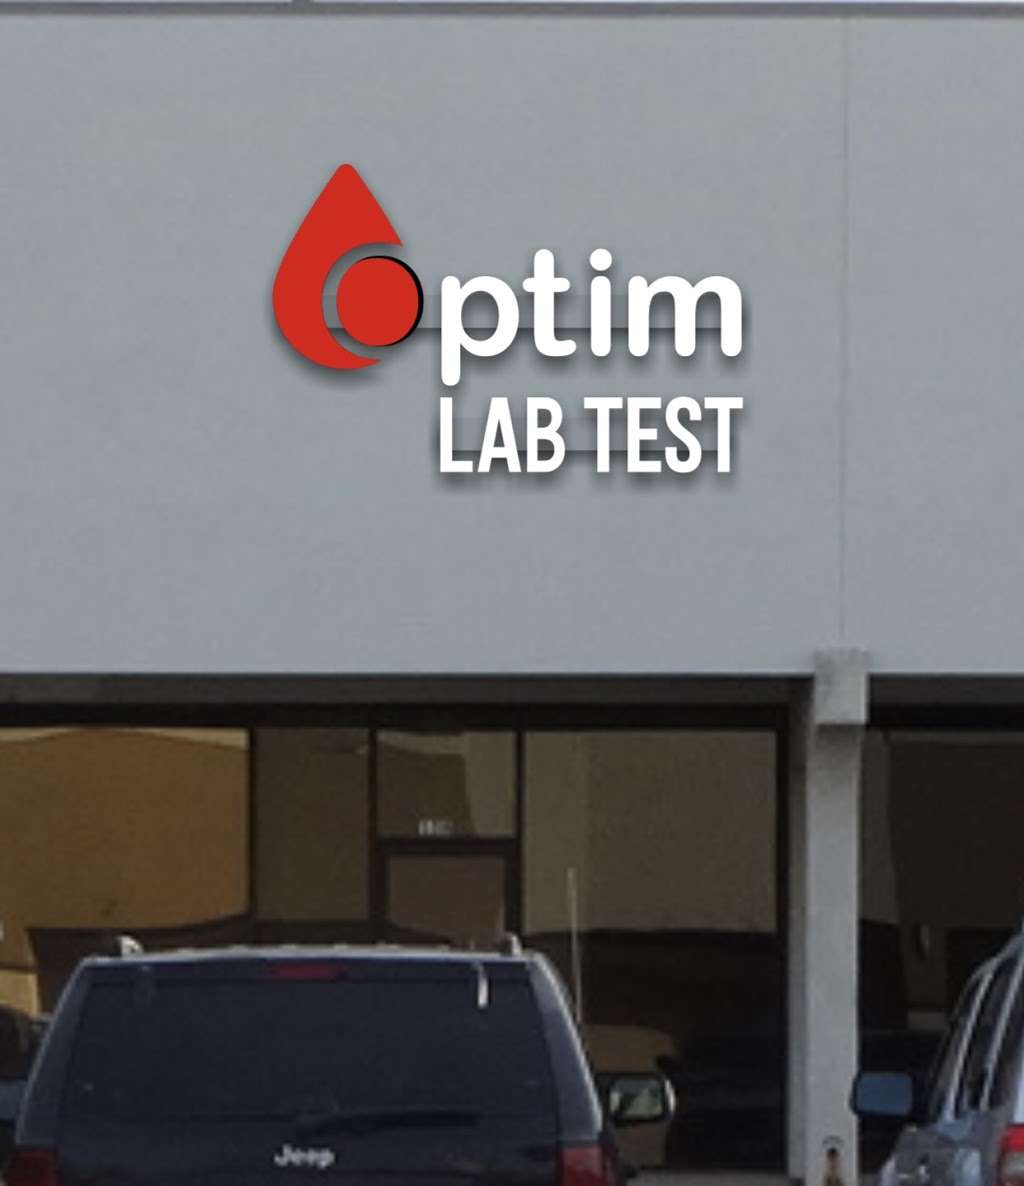 Optim Lab Test | 2703 Highway 6 Ste 138, Ste 138, Houston, TX 77082, USA | Phone: (832) 328-0075